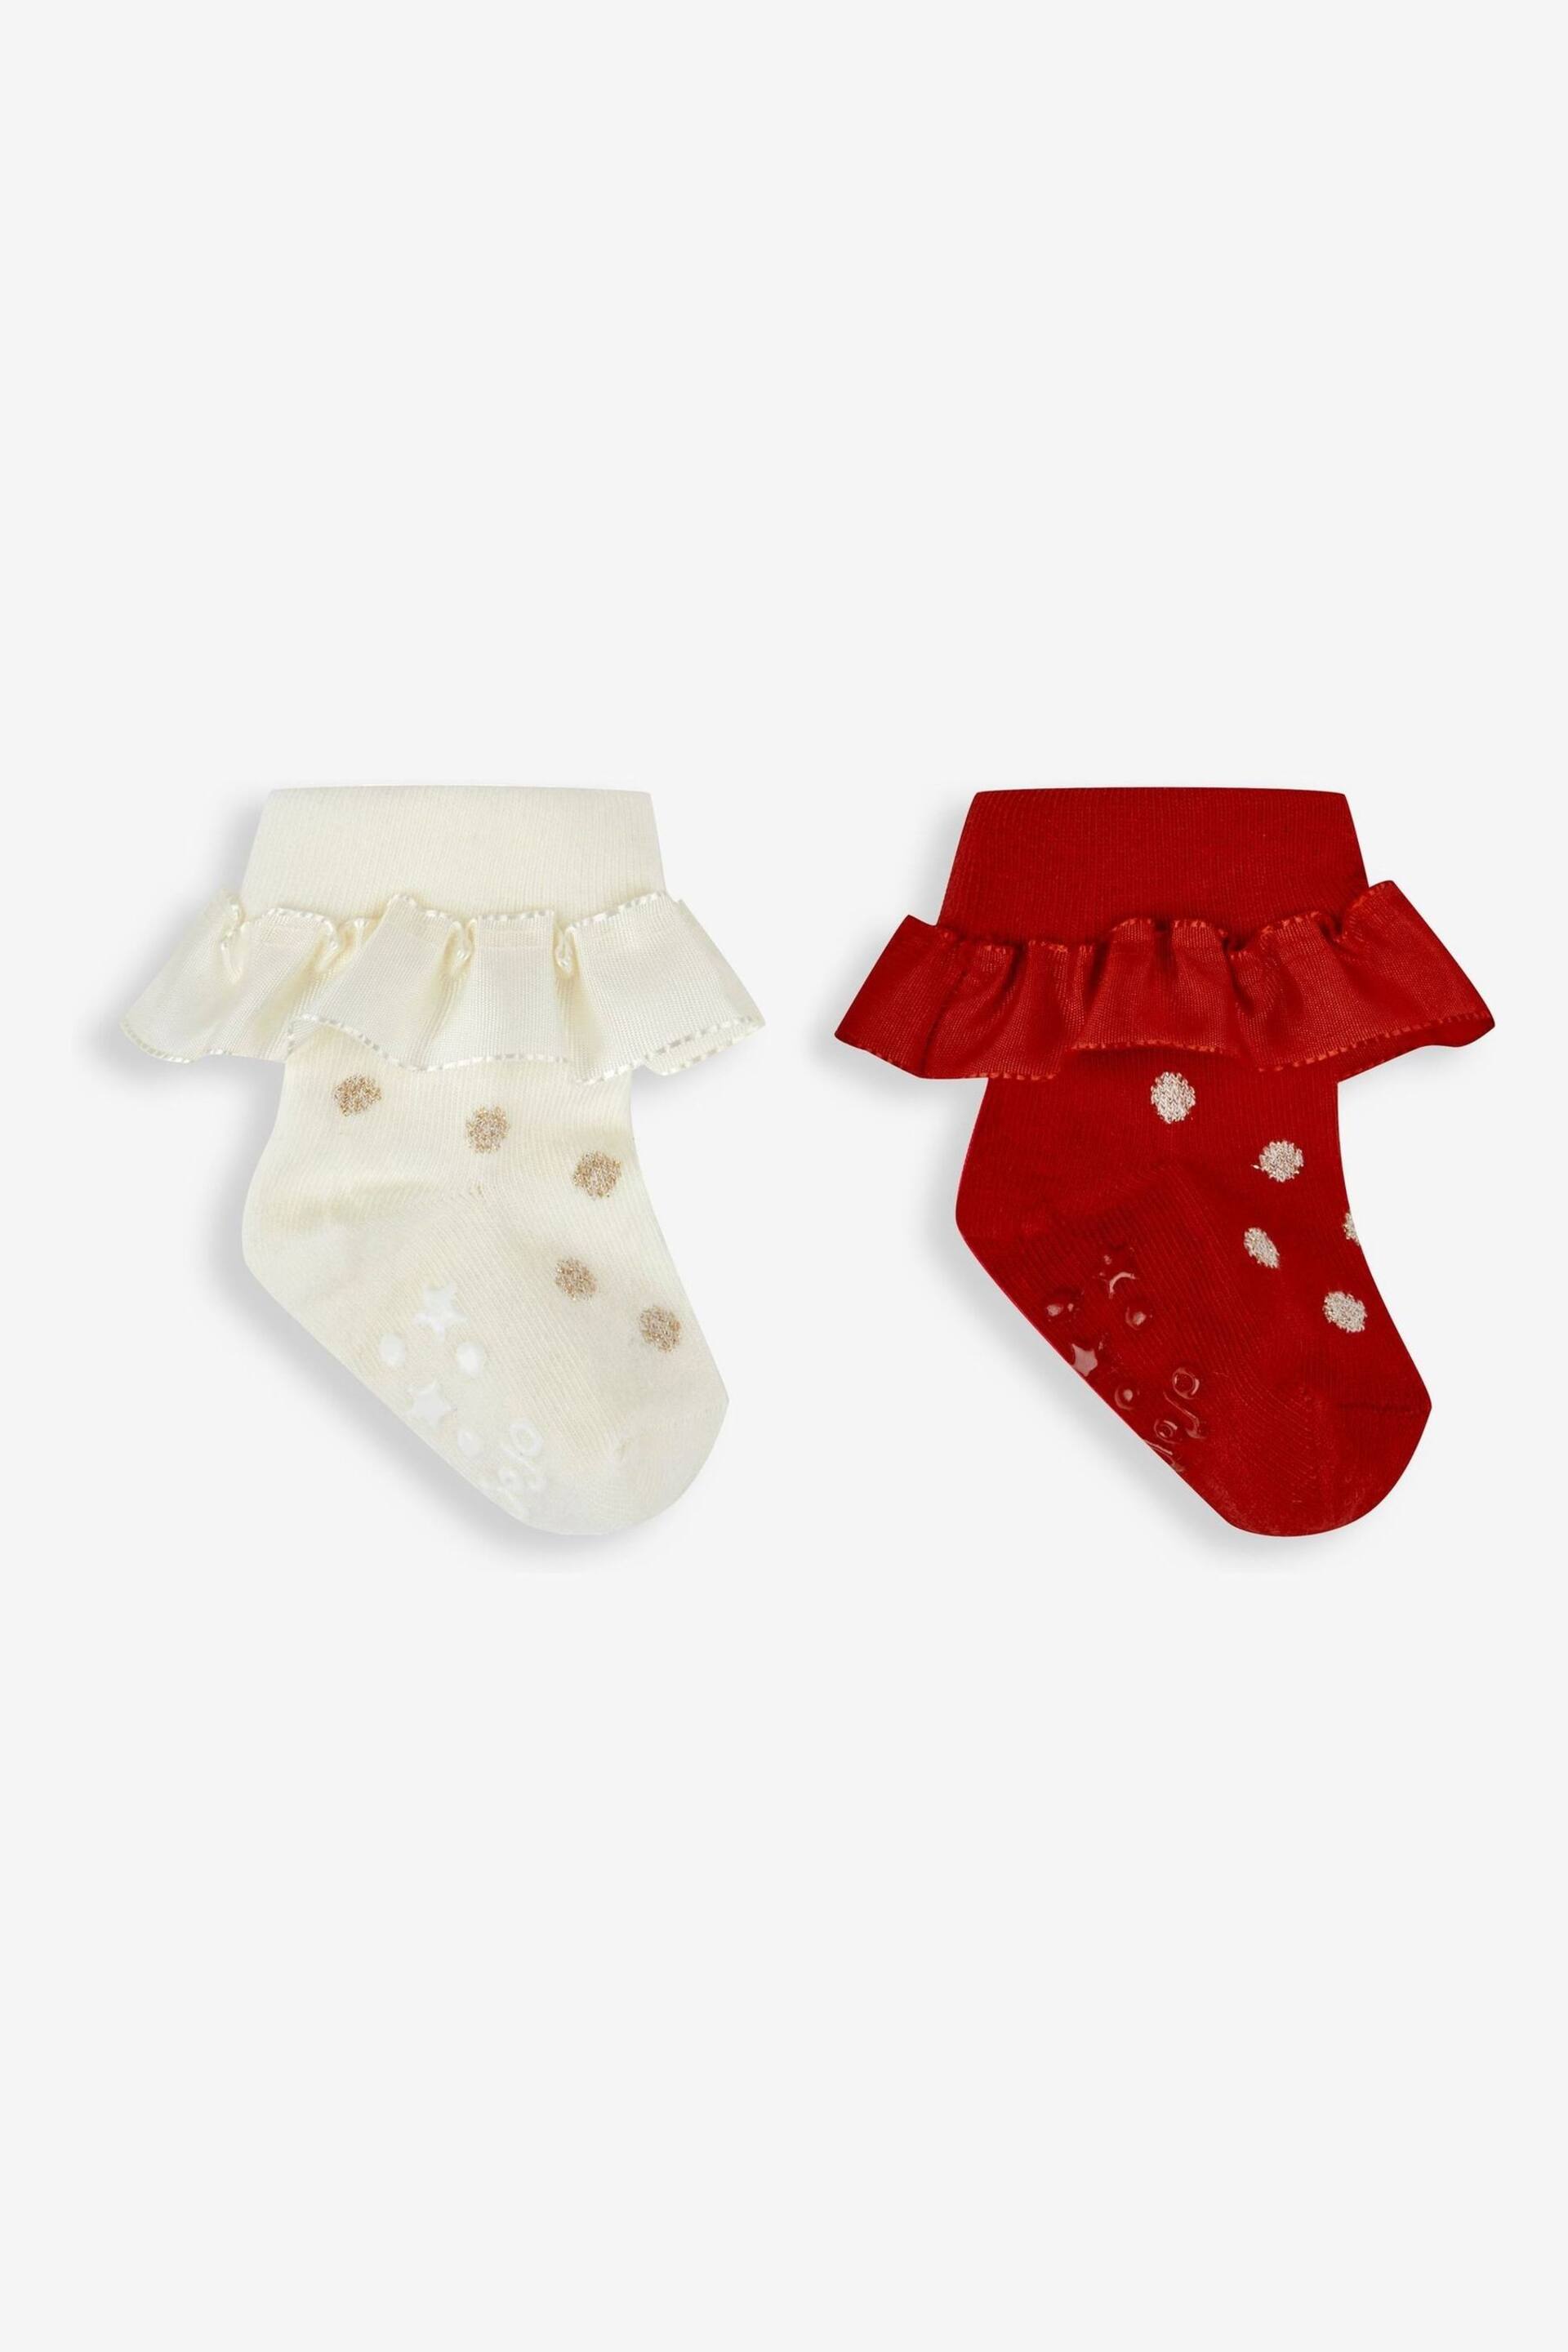 JoJo Maman Bébé Red 2-Pack Spot Ruffle Socks - Image 1 of 3